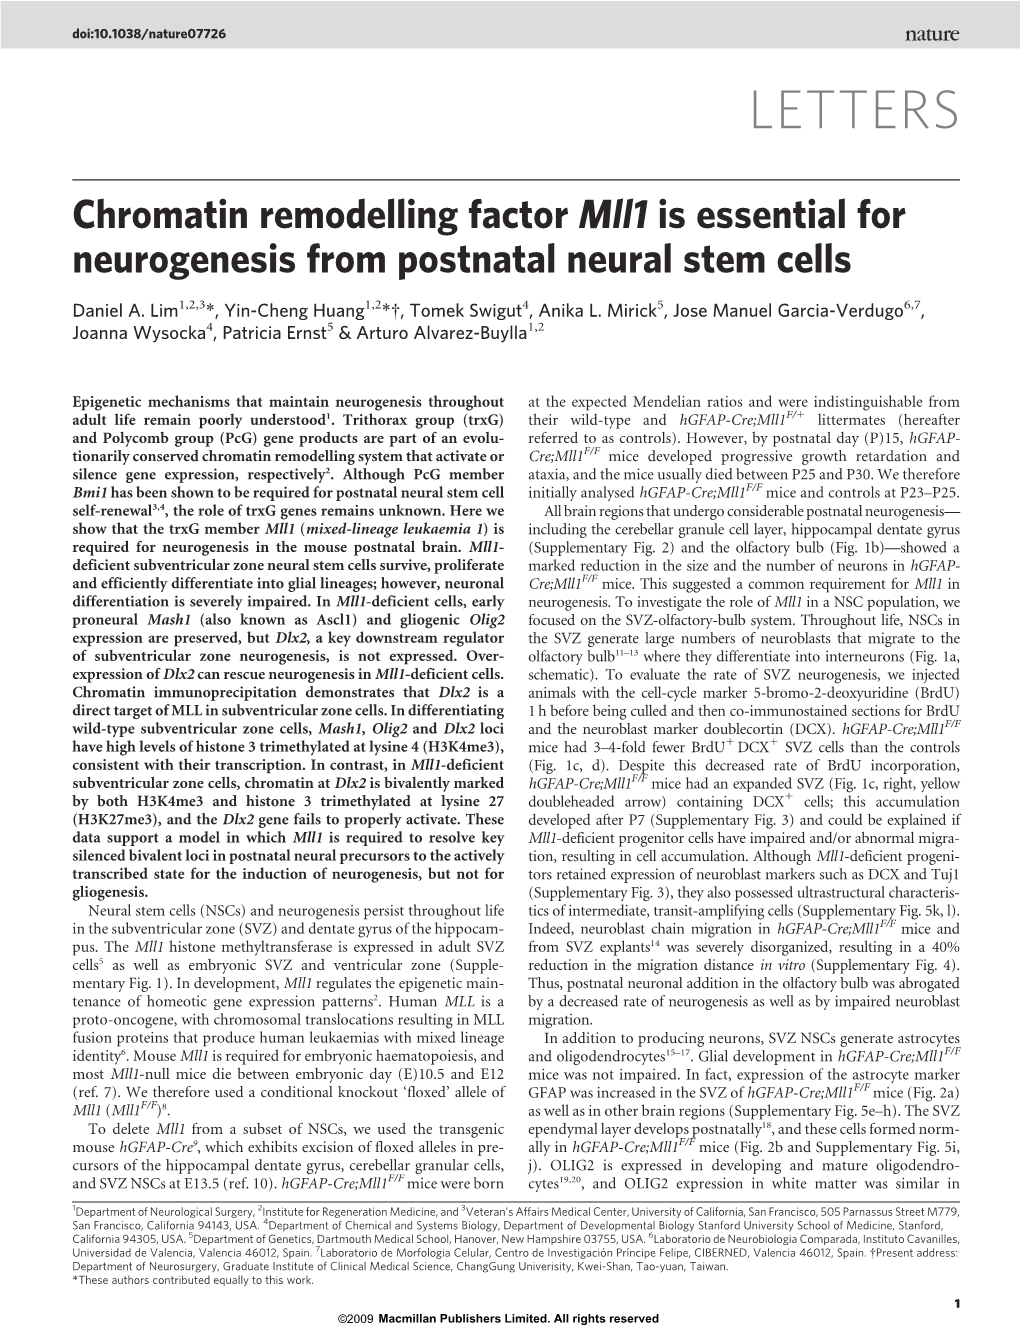 Chromatin Remodelling Factor Mll1 Is Essential for Neurogenesis from Postnatal Neural Stem Cells